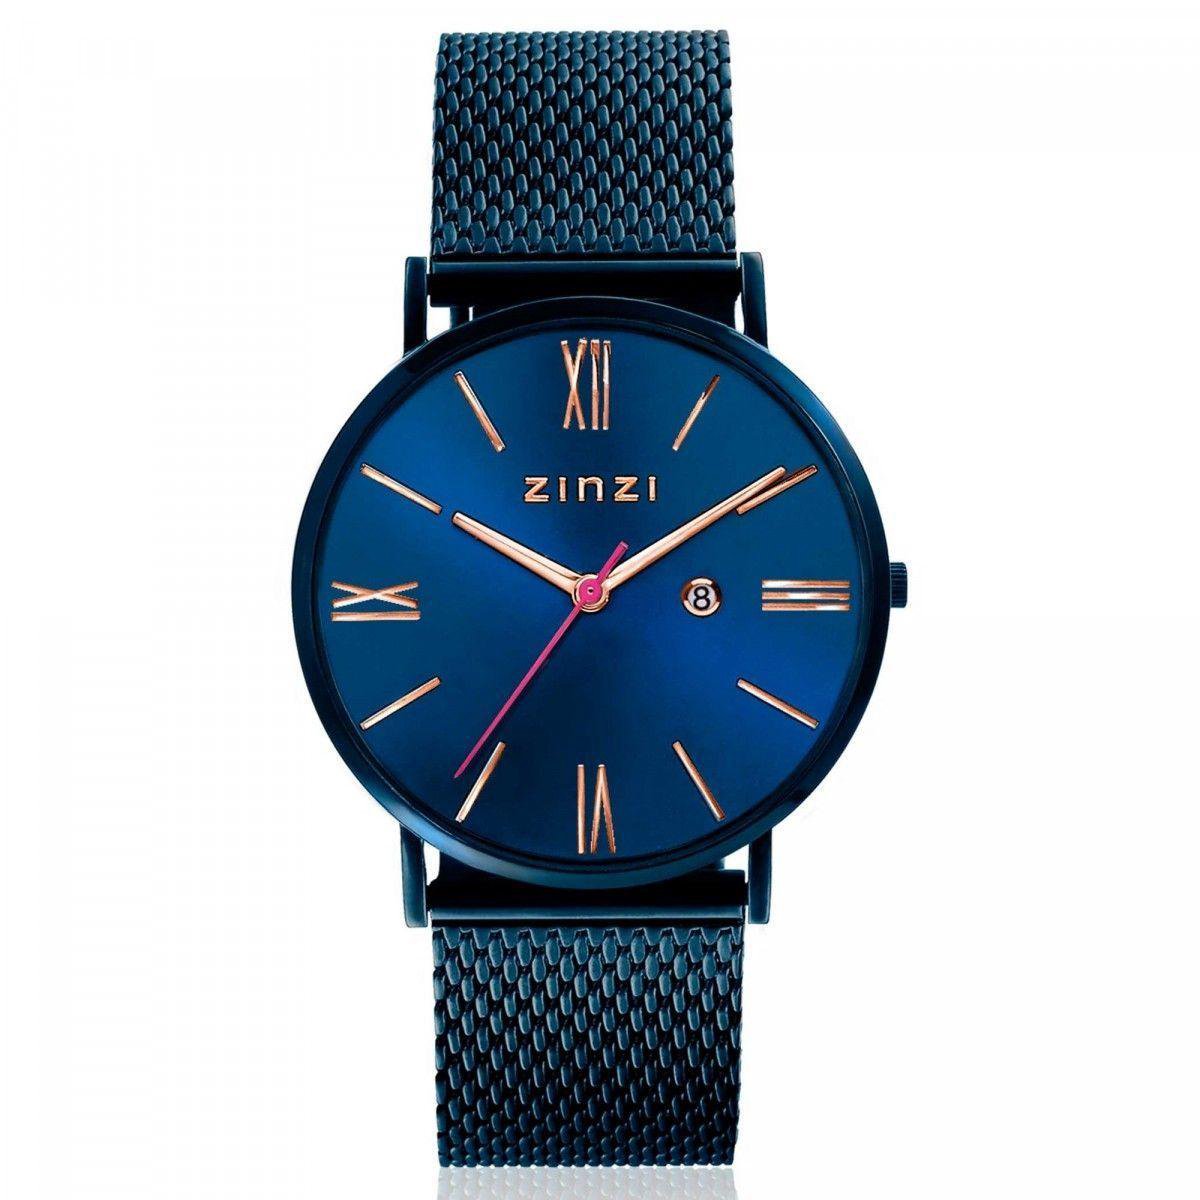 ZINZI ZIW514M horloge - band blauwgekleurd - 34mm + gratis Zinzi armbandje